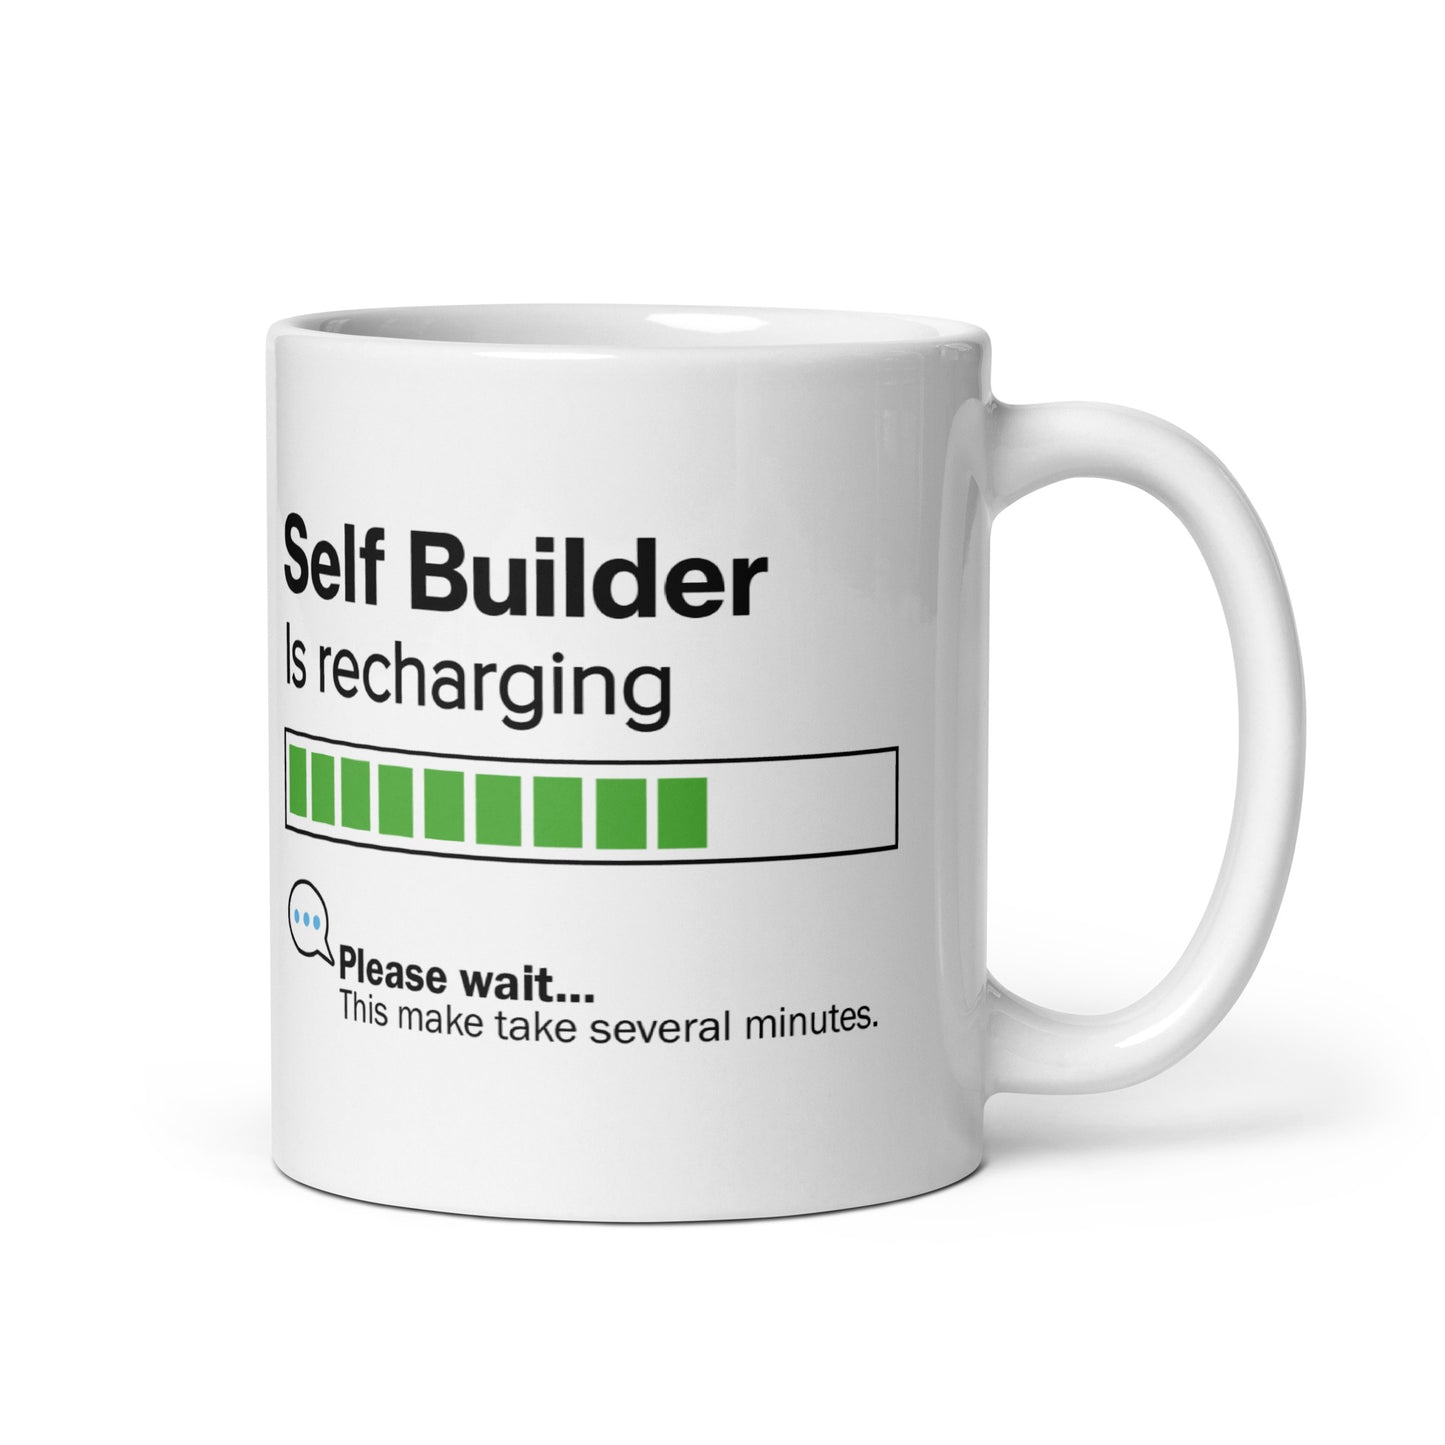 Self Builder Is Recharging Mug - 11oz - Gift for DIY Enthusiasts